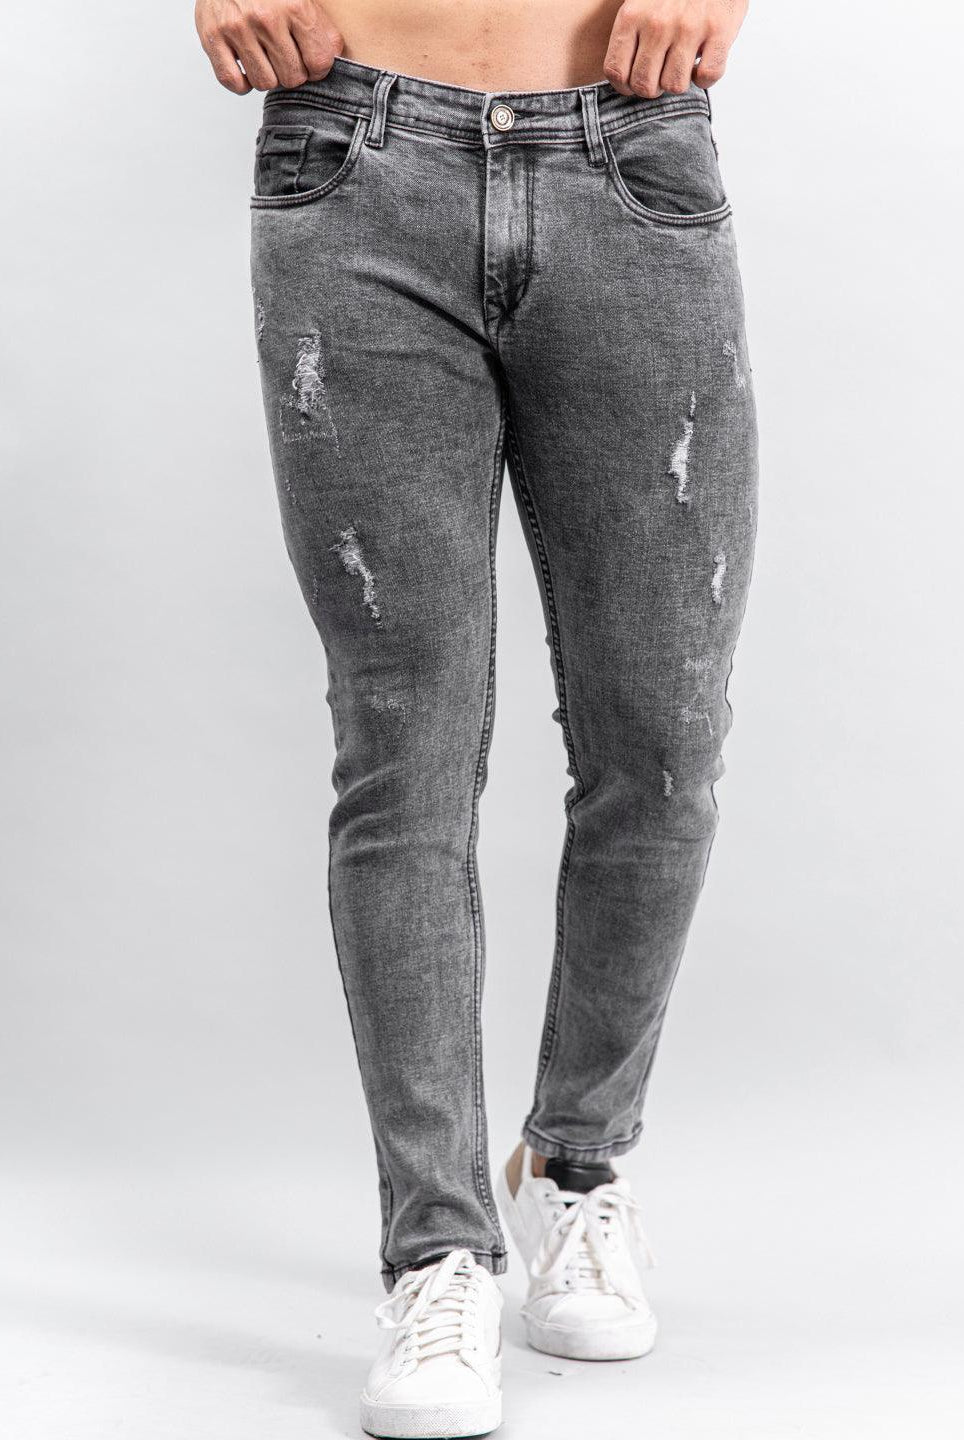 grey denim ankle length stretchable mens jeans